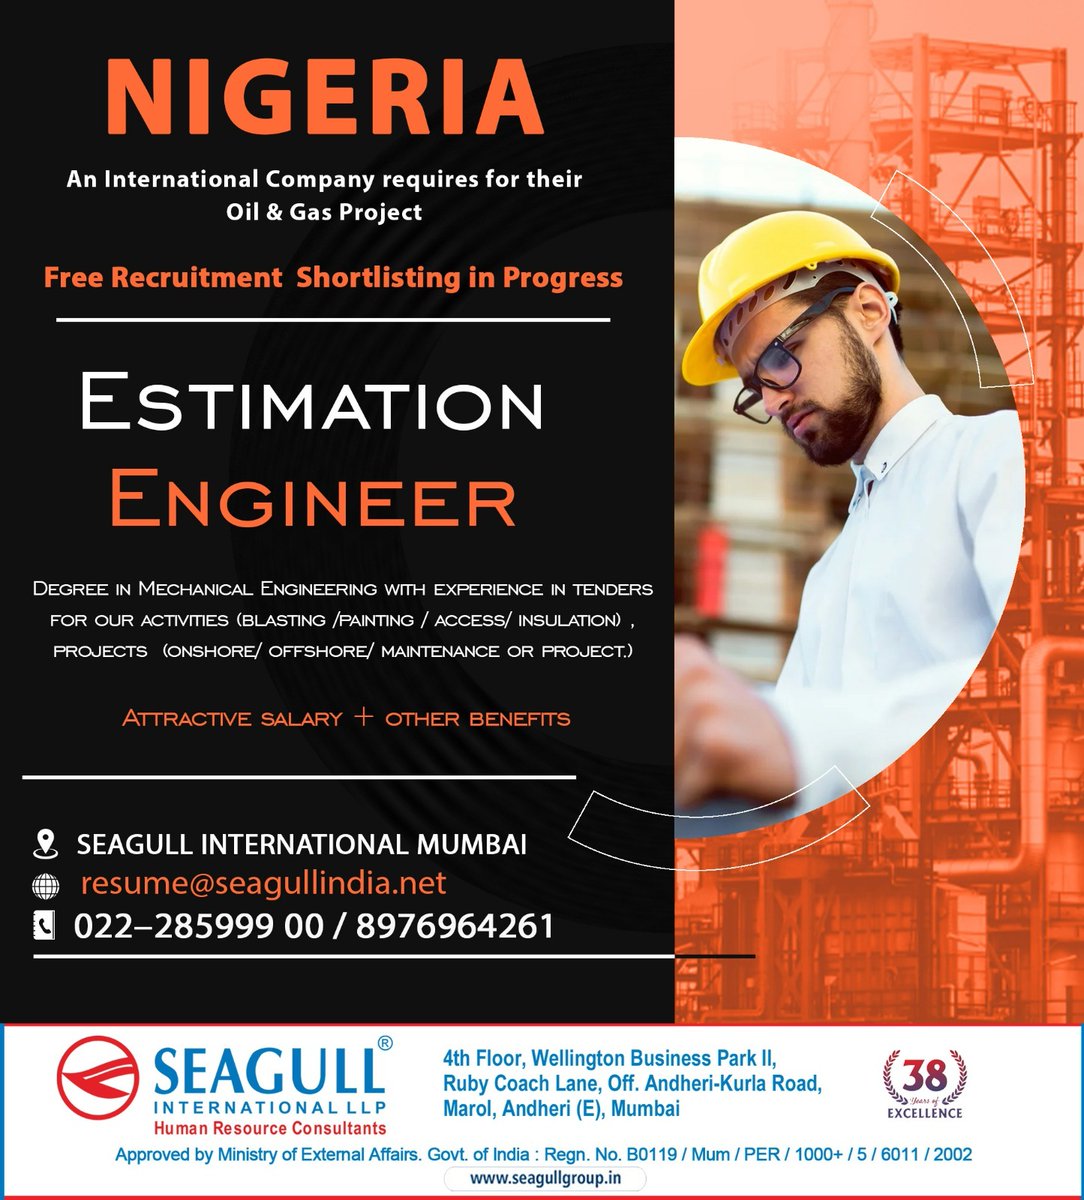 🇳🇬Nigeria Jobs 
‼️Free Recruitment
✔️Shortlisting In Progress 
.

.

.
#nigeriajobs #seagull #mumbaijobs #estimationengineer